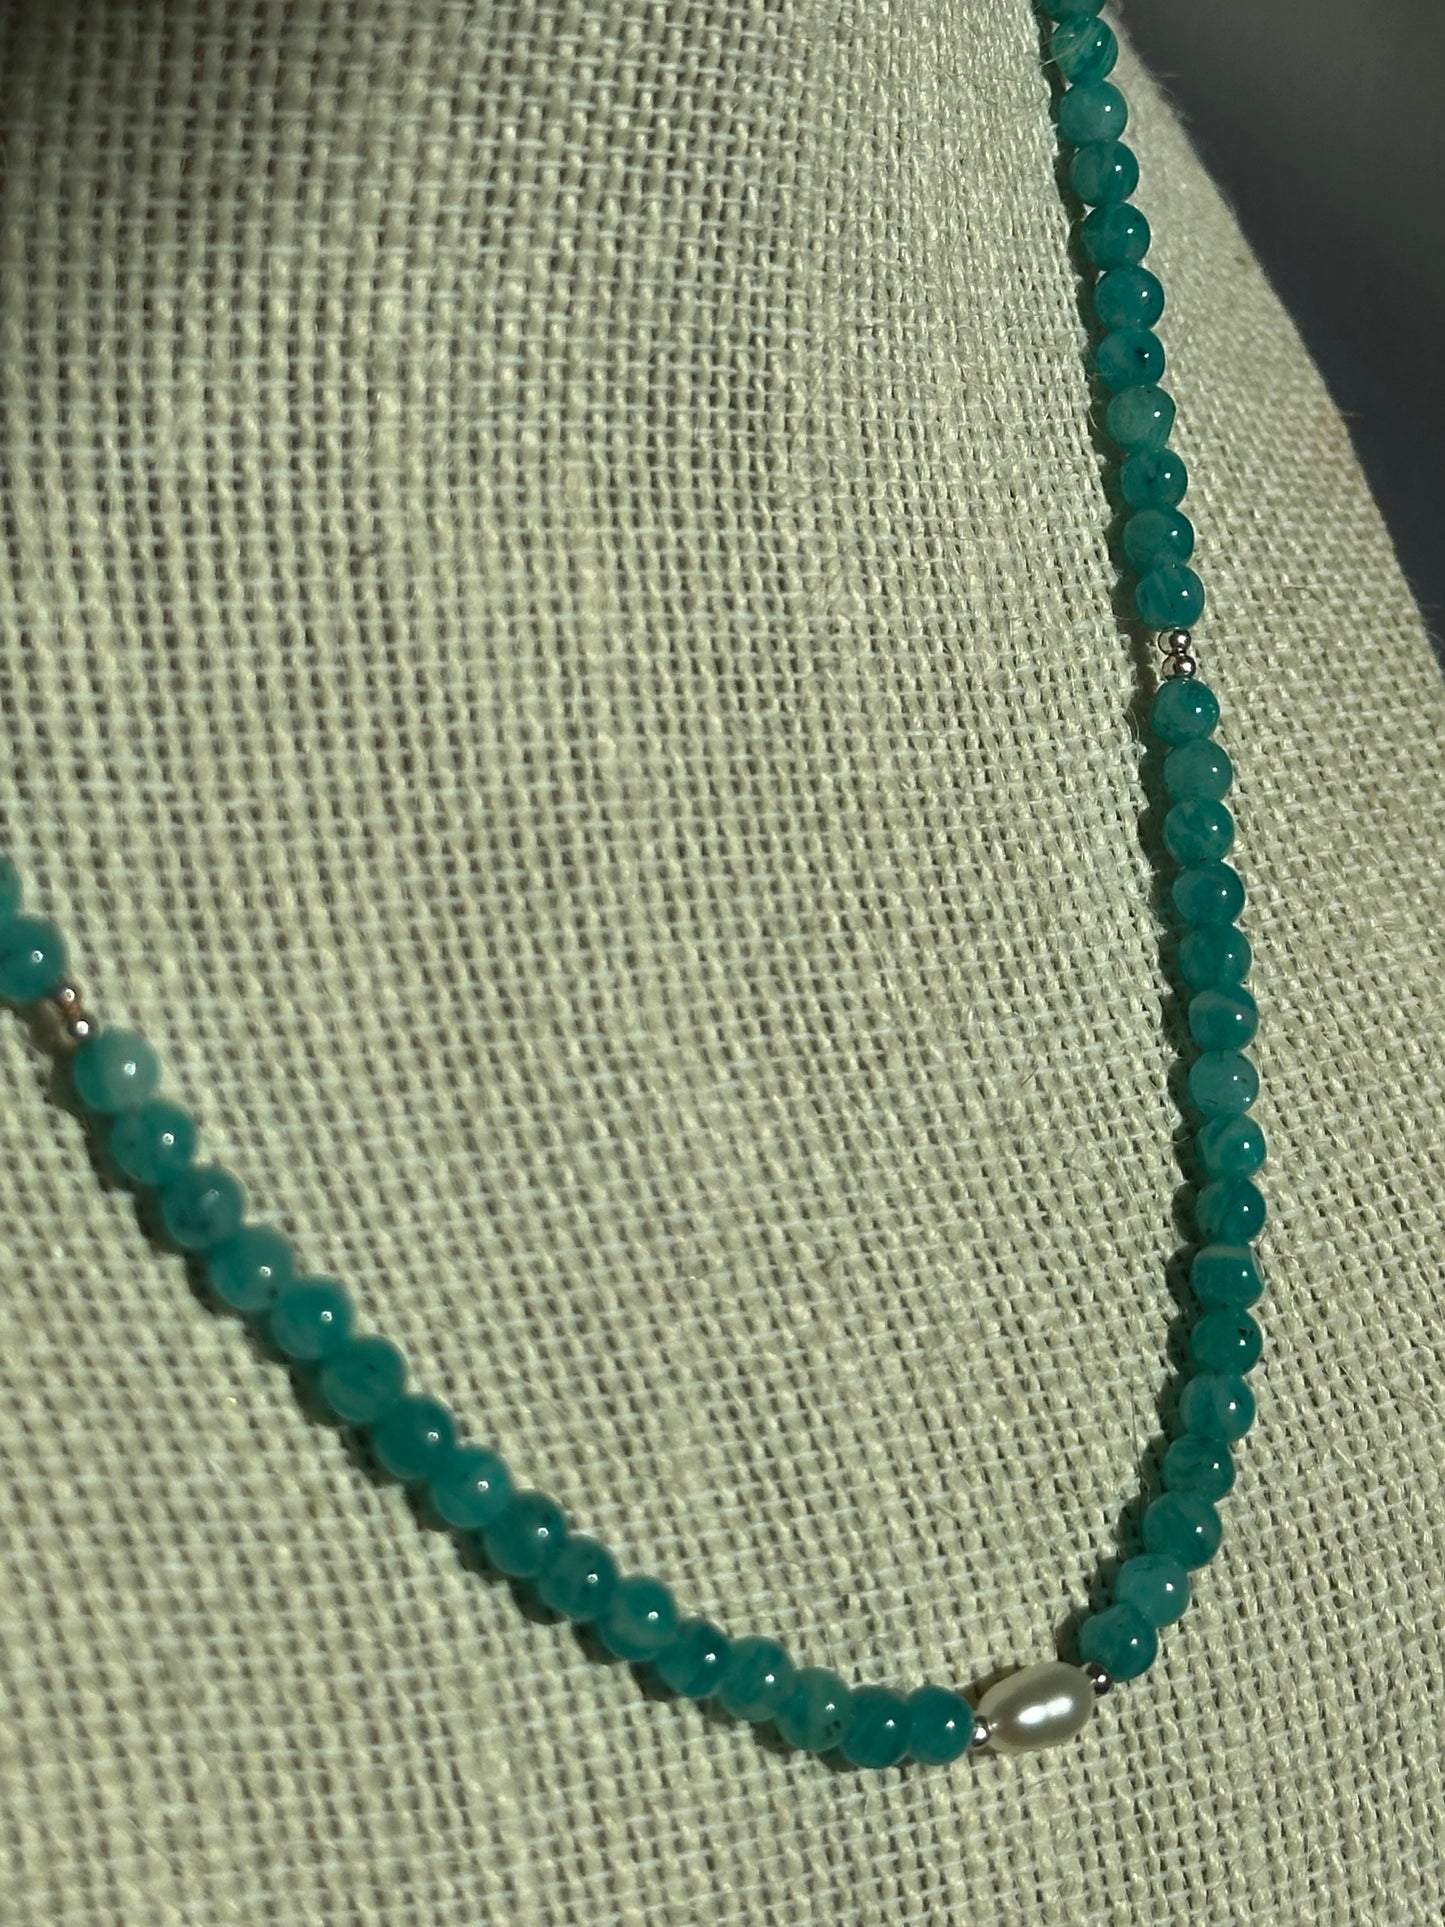 Seafoam Amazonite necklace